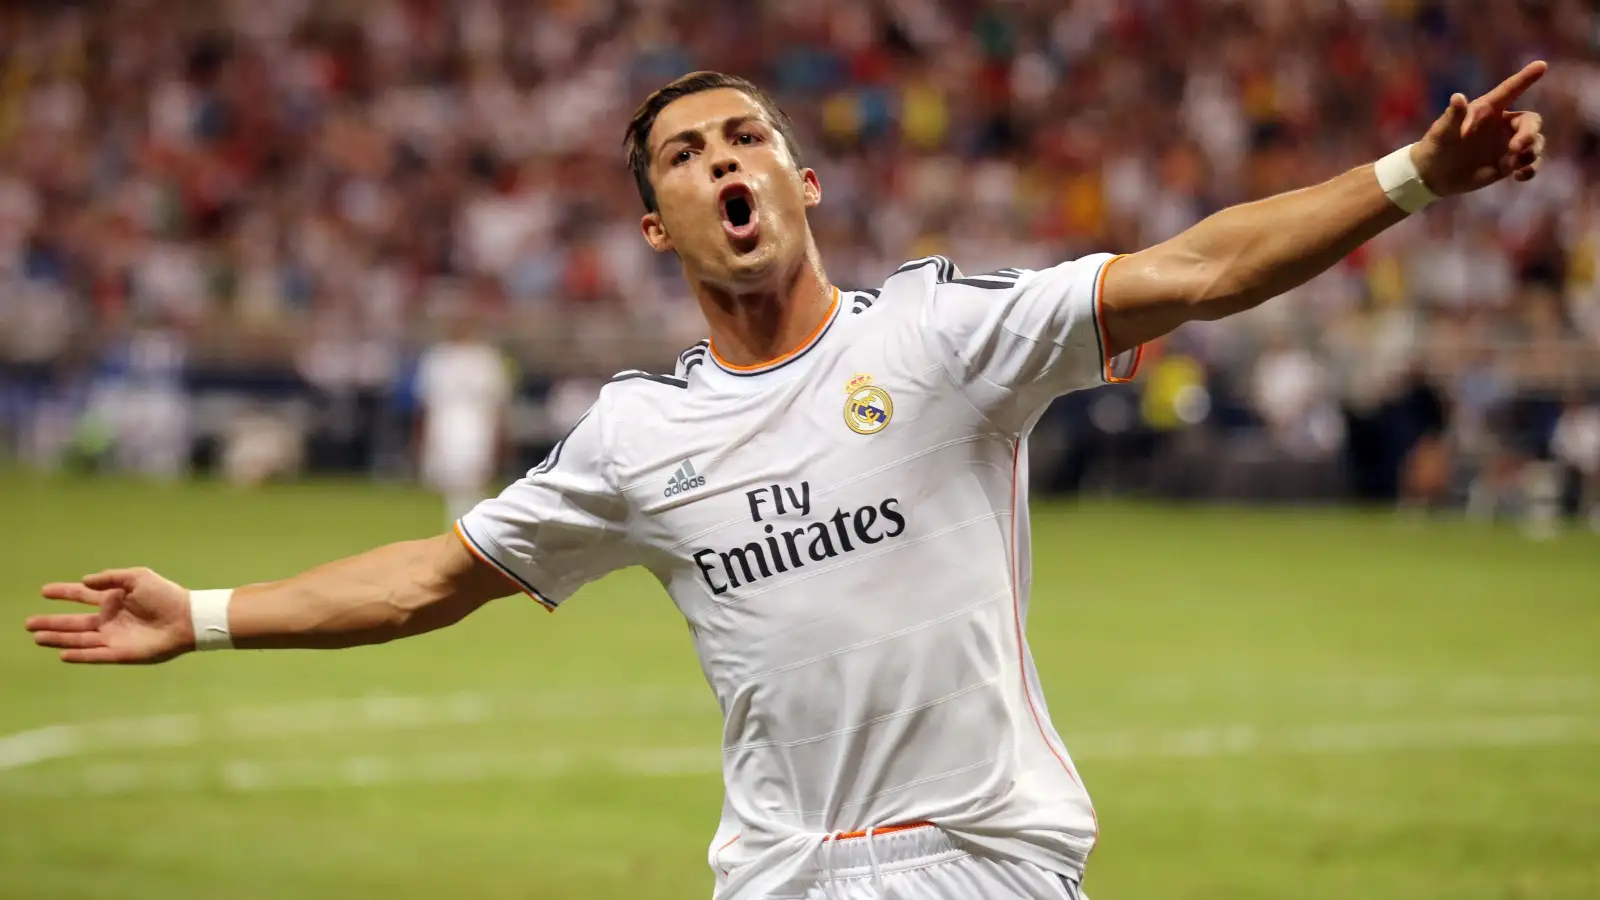 Can you name every club Cristiano Ronaldo has scored 5+ goals against?